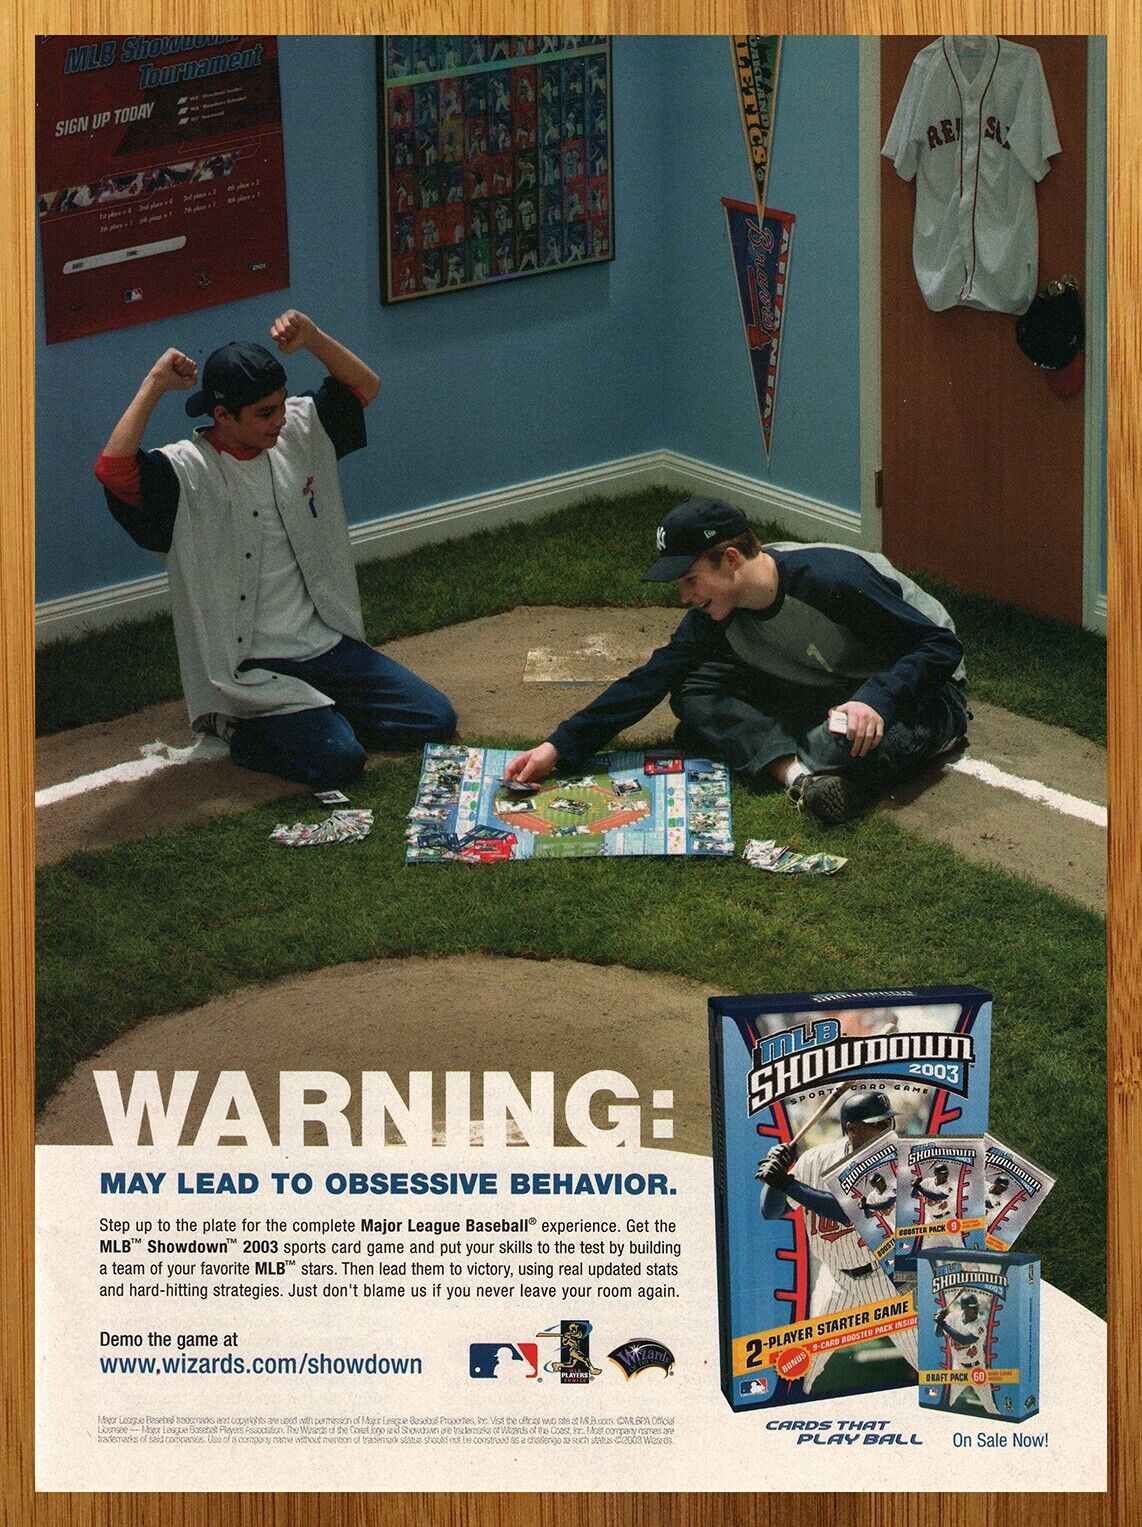 2003 MLB Showdown Sports Card Game Print Ad/Poster Baseball CCG TCG Promo Art